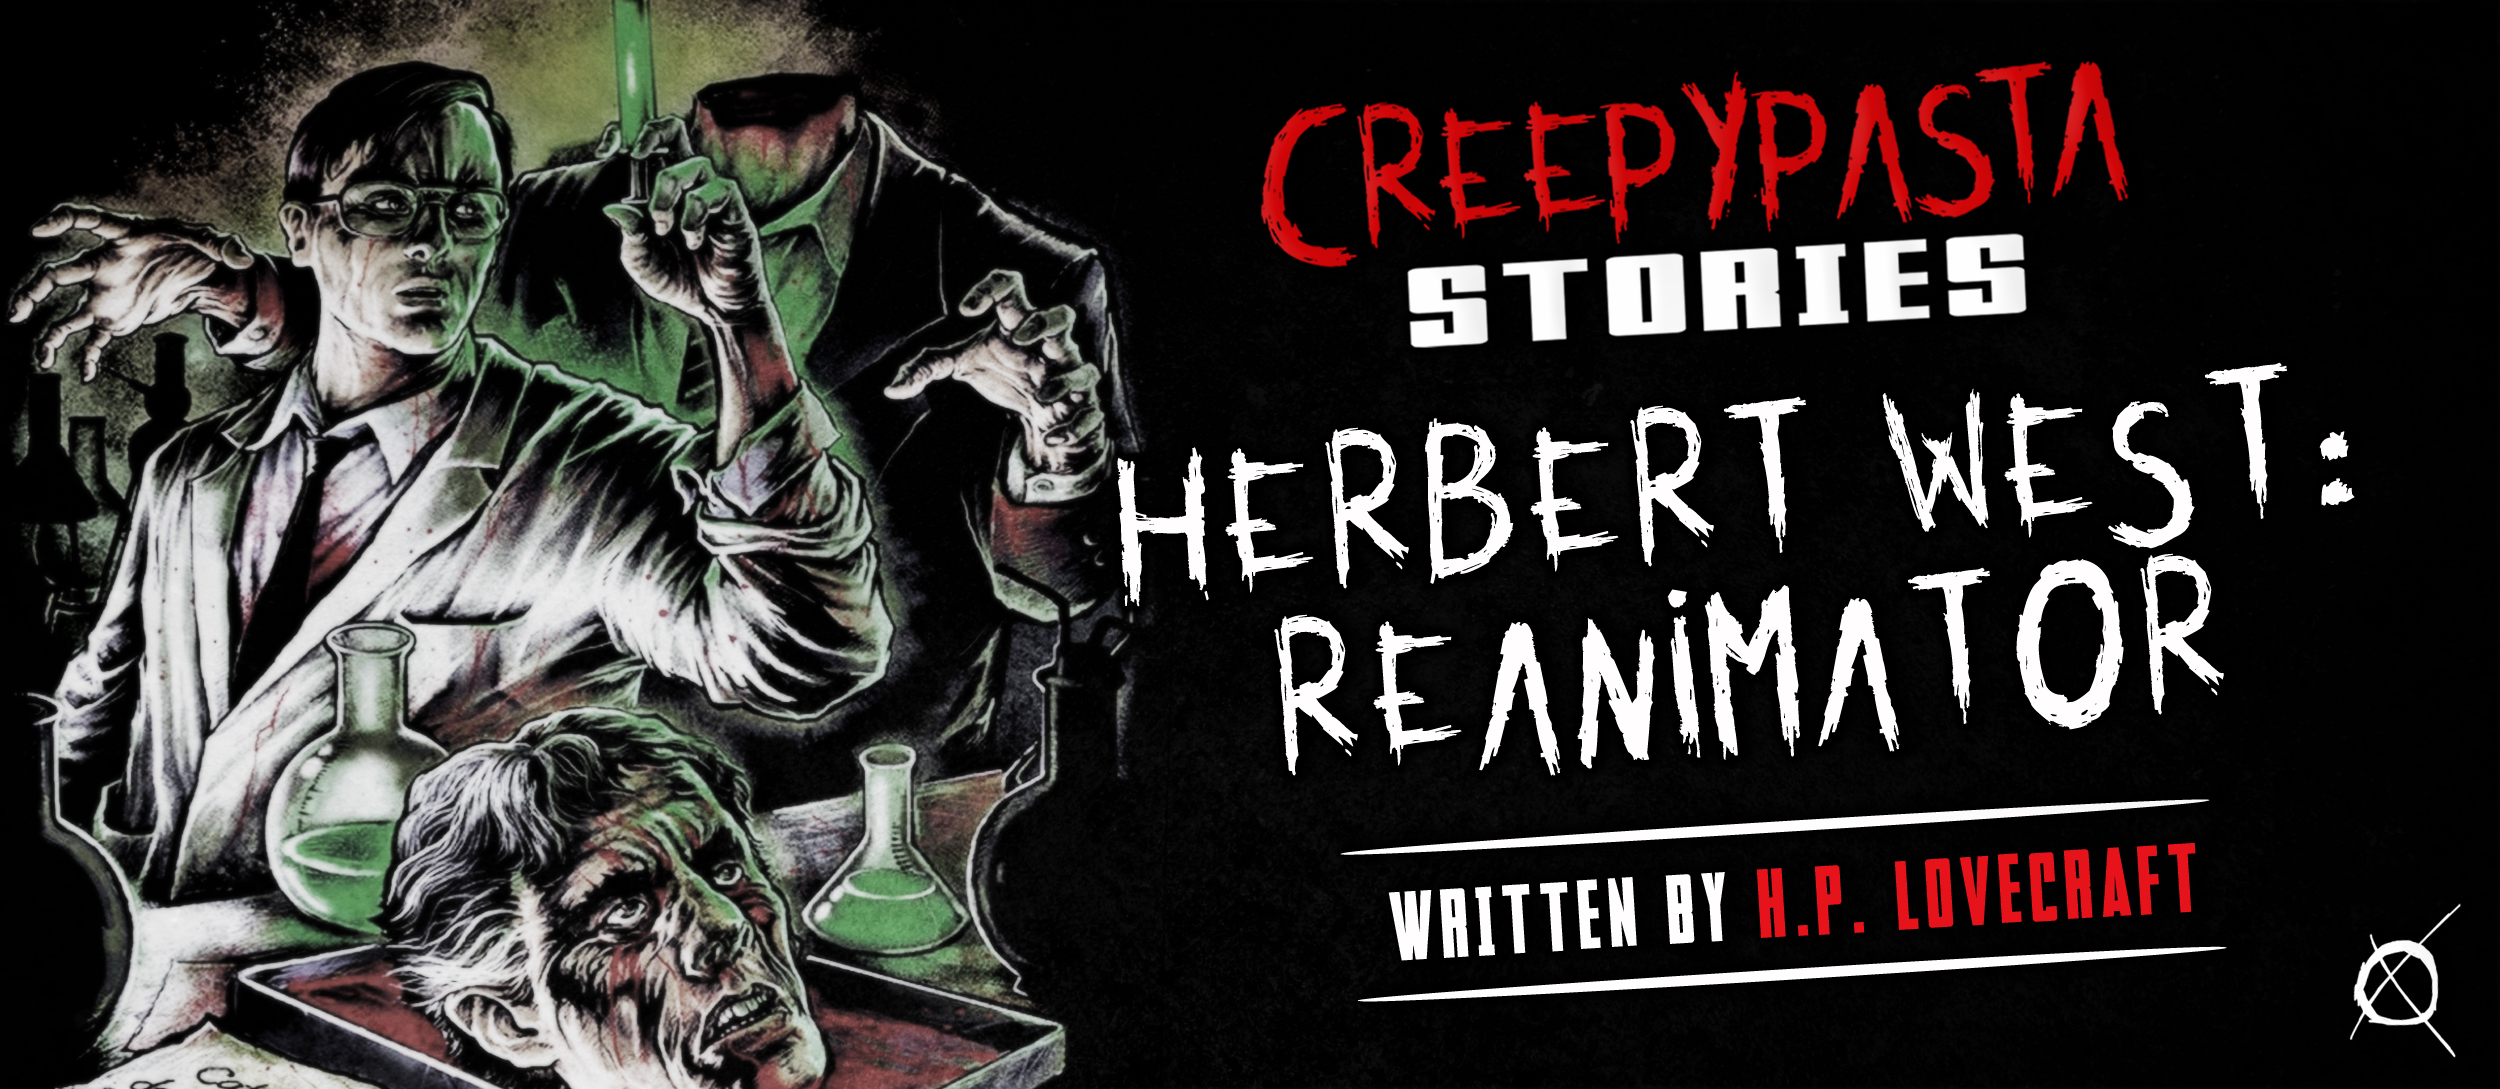 Herbert West Reanimator Creepypasta Horror Fiction Stories From